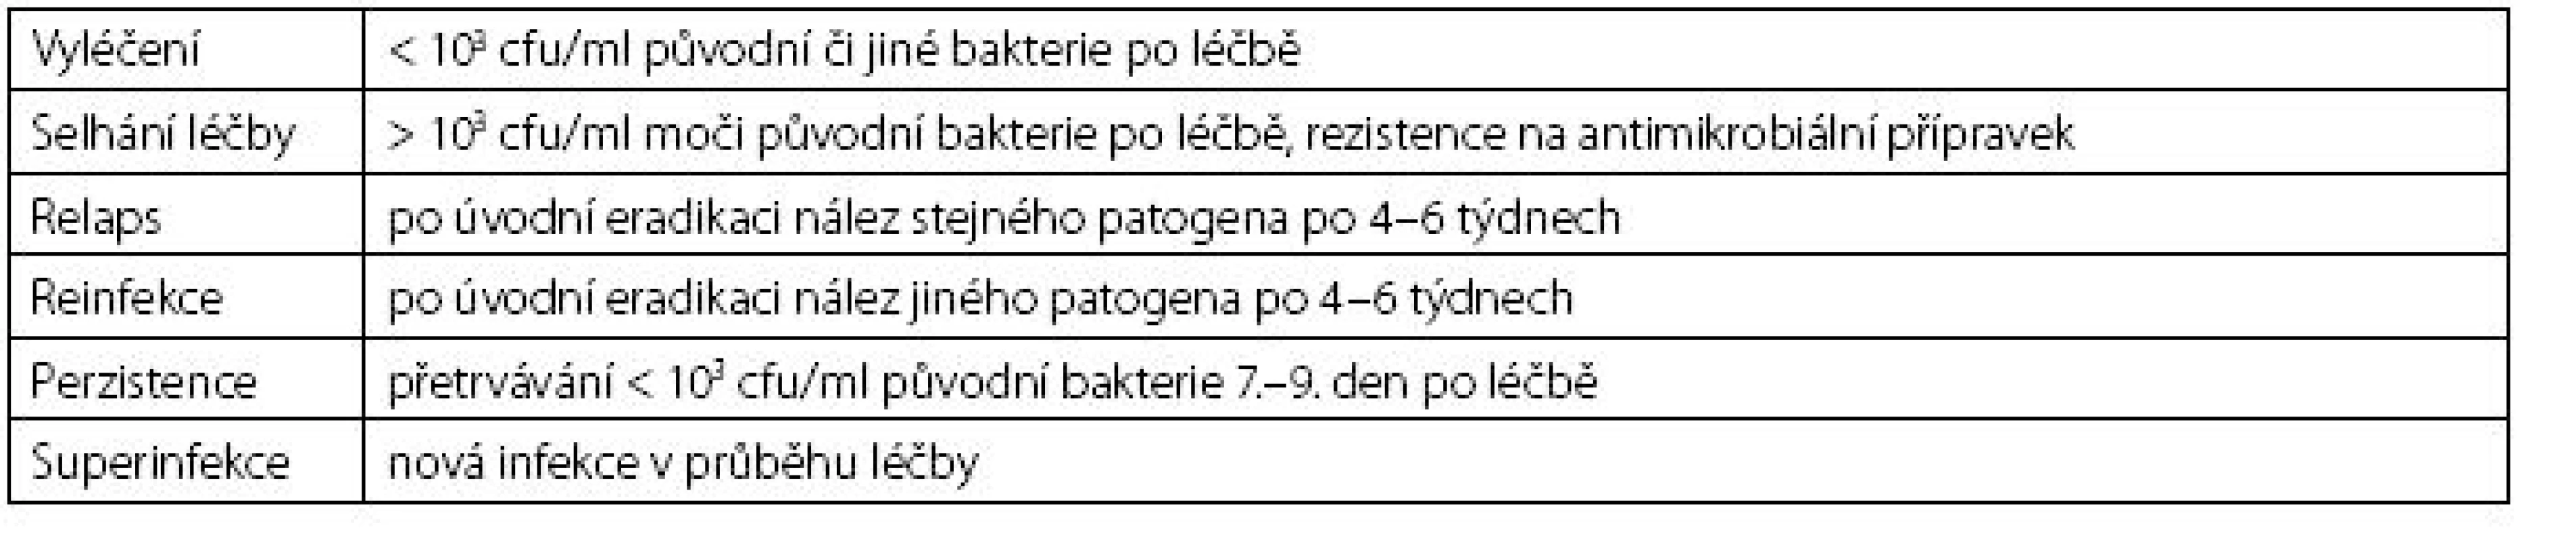 Kritéria mikrobiologického hodnocení léčby močových infekcí (2)
Table 2. The criteria for microbiological evaluation of the treatment of urinary tract infections (2)